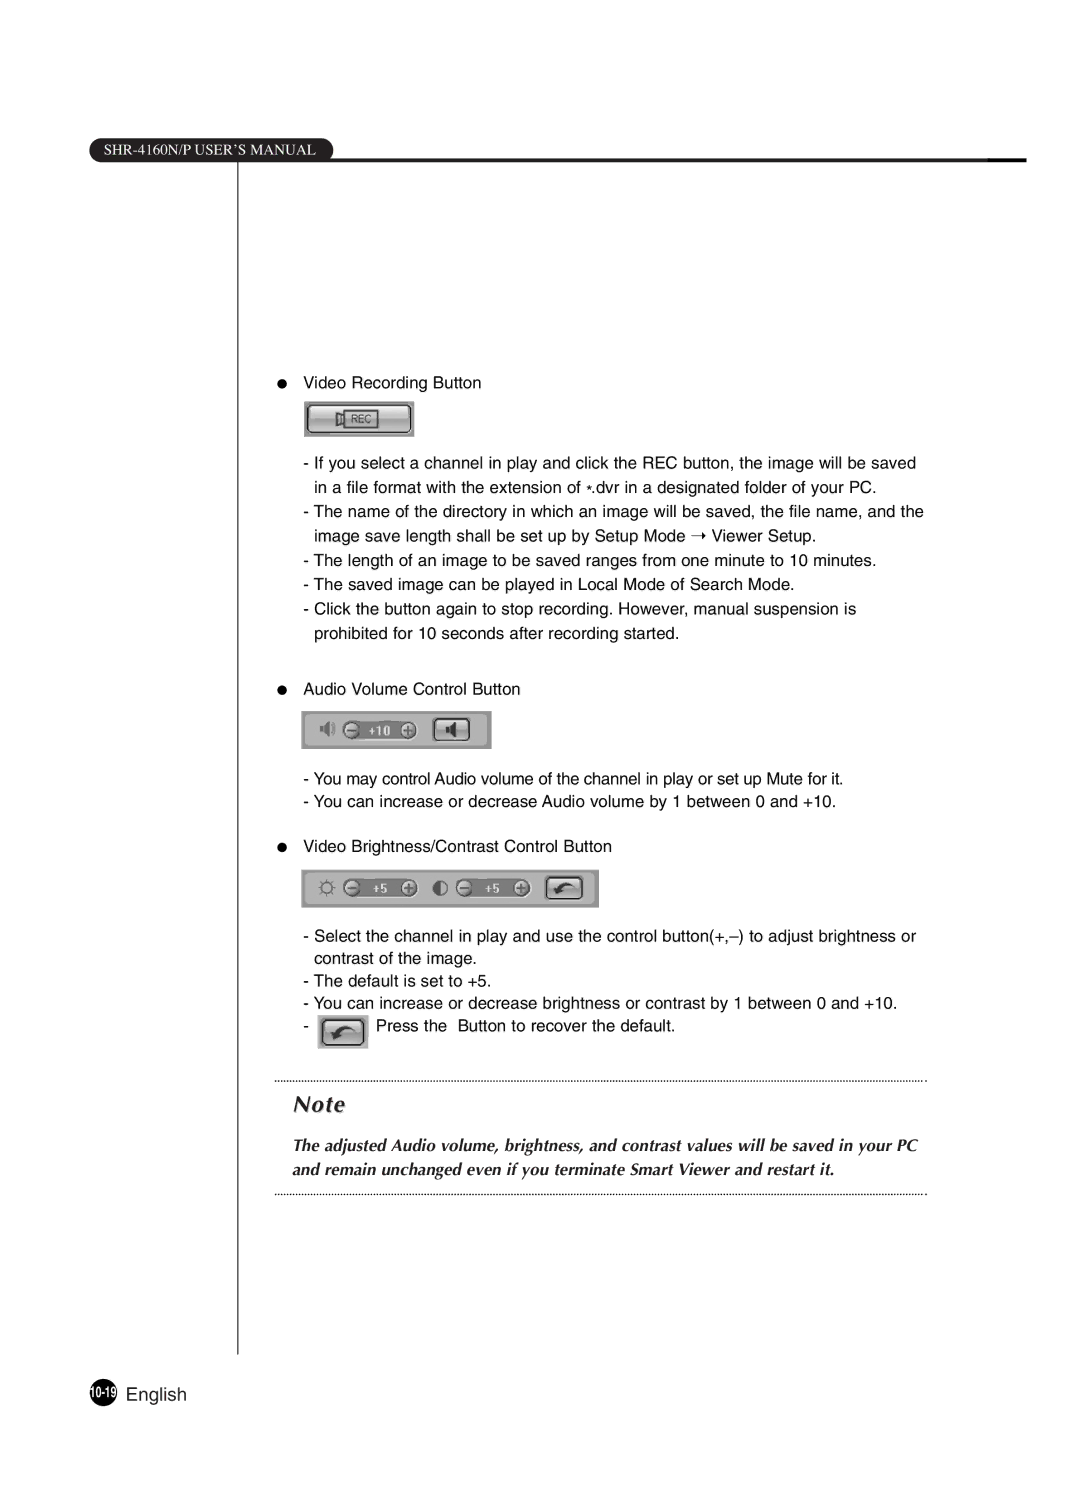 Samsung SHR-4160P manual 10-19English 